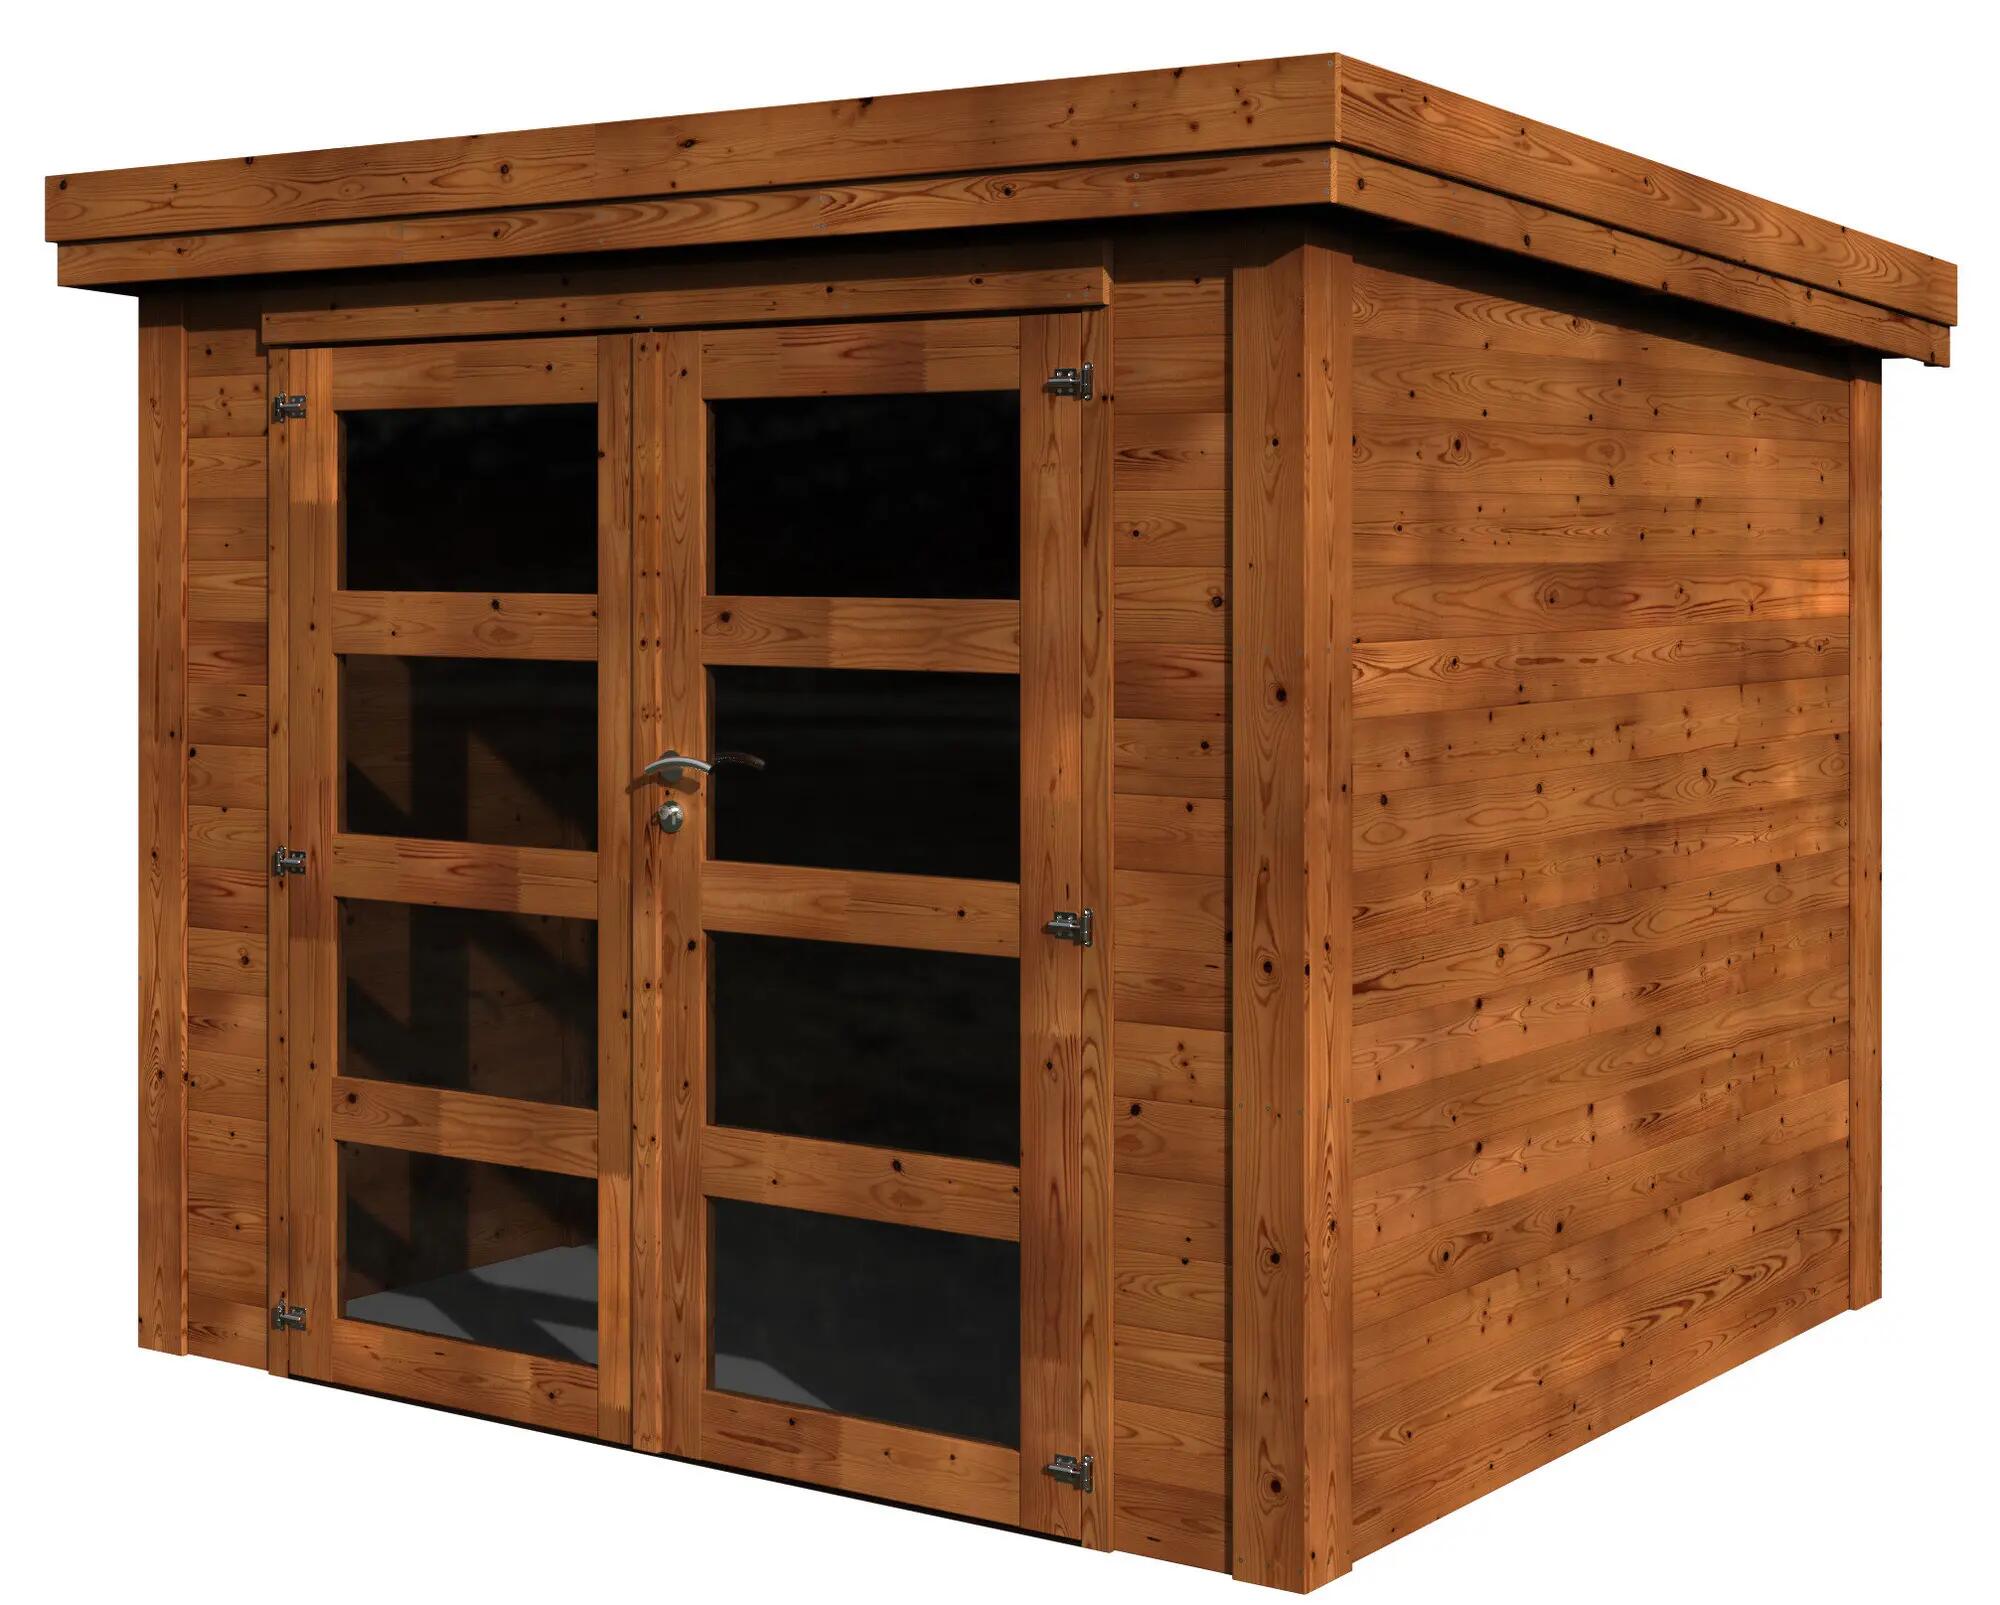 Caseta de madera pico tratada de 269x213x240 cm y 6.46 m2